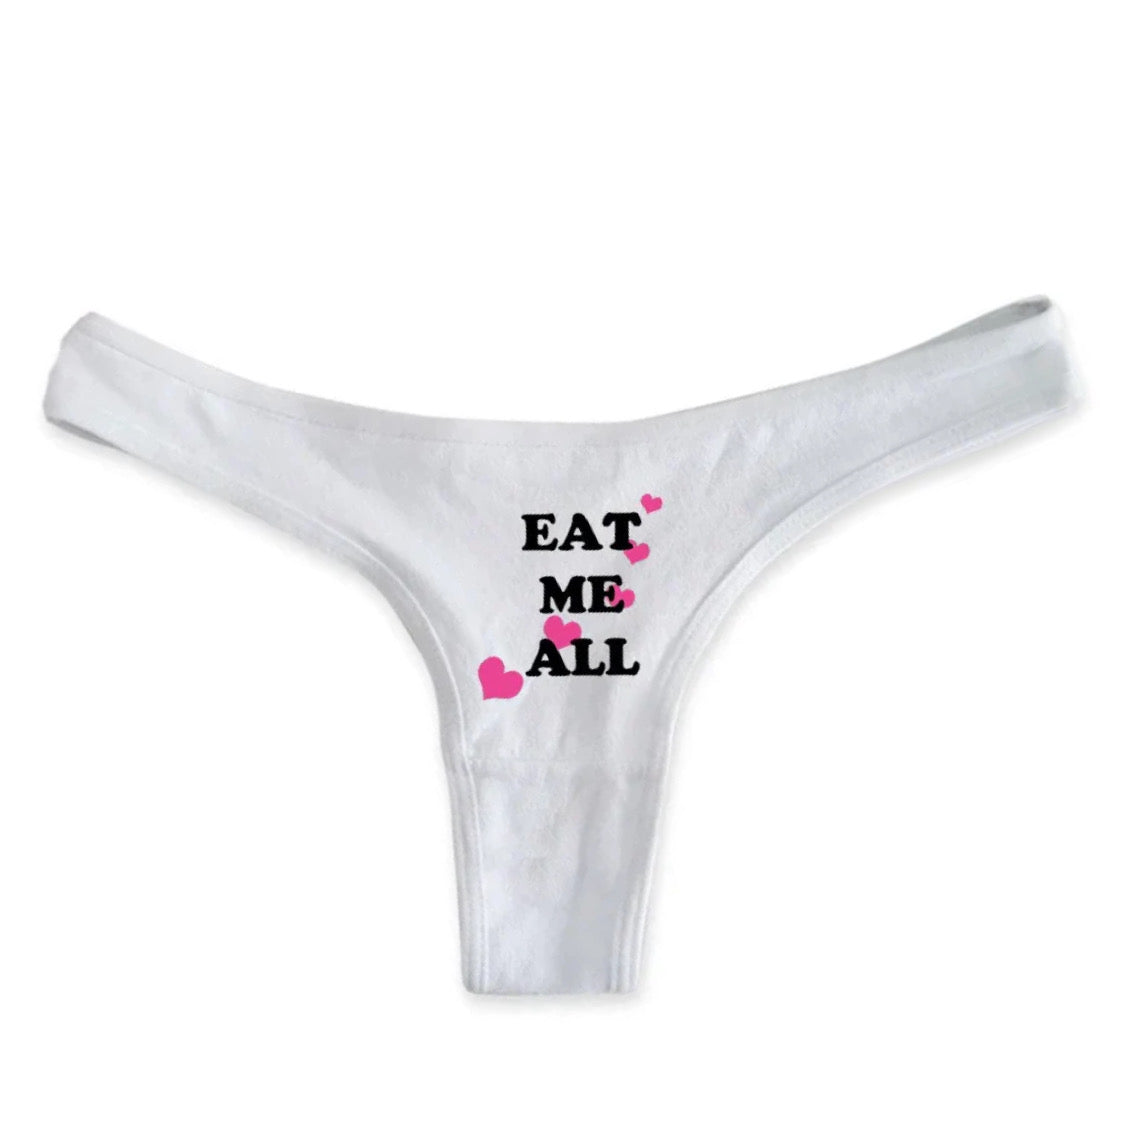 " eat me all💕" white panties